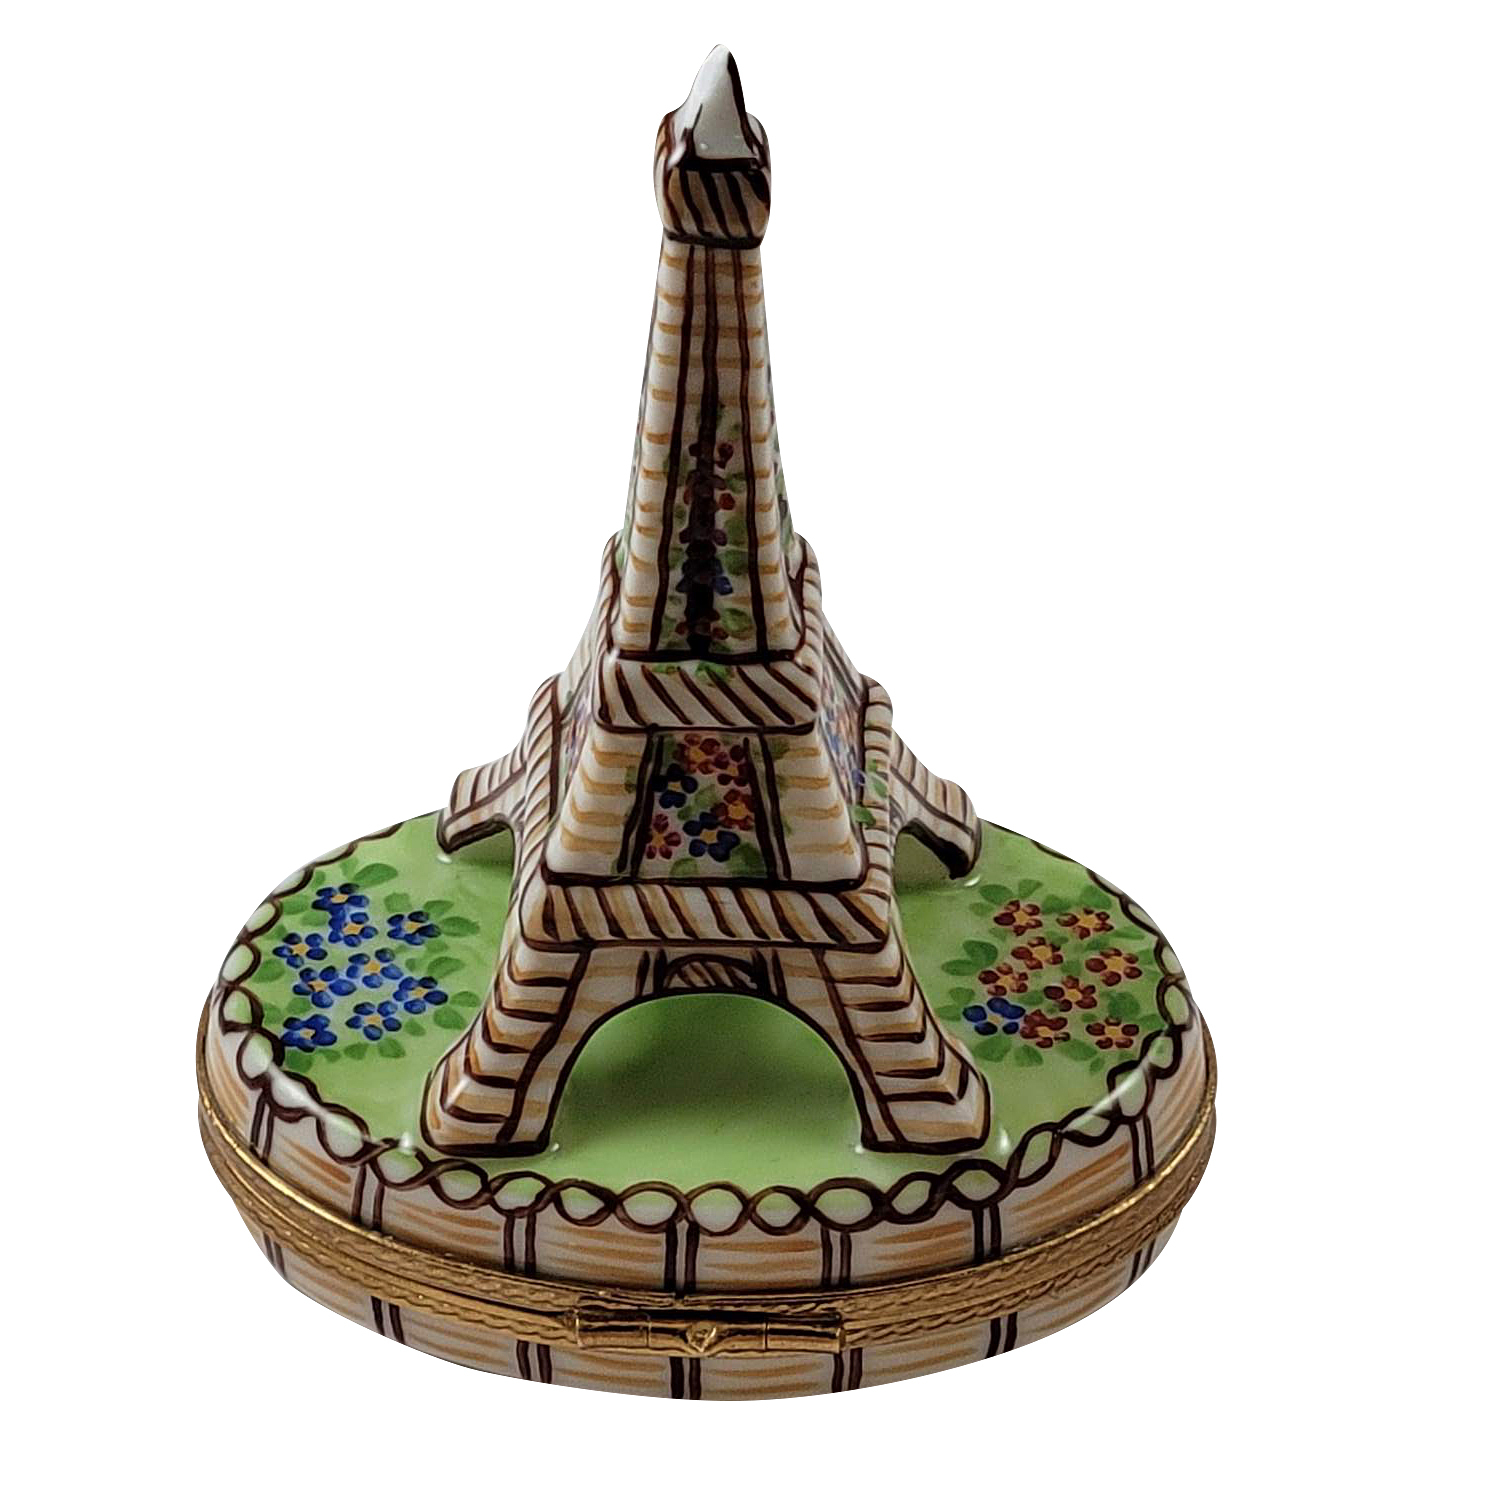 BROWN EIFFEL TOWER - I LOVE PARIS PAINTED INSIDE